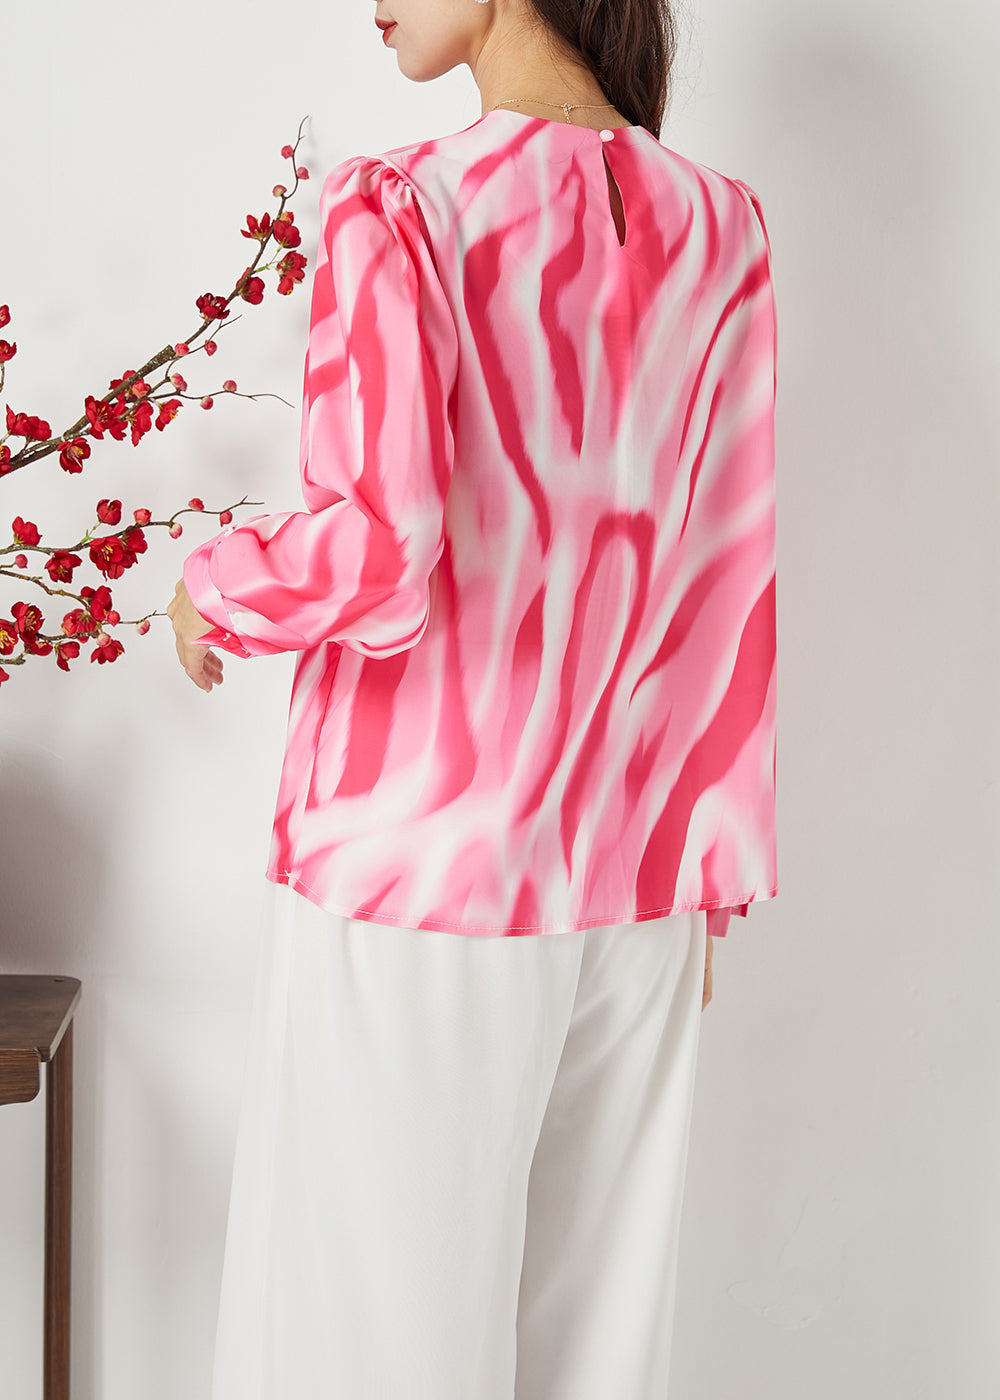 Organic Red Oversized Tie Dye Chiffon Shirt Spring LY1122 - fabuloryshop